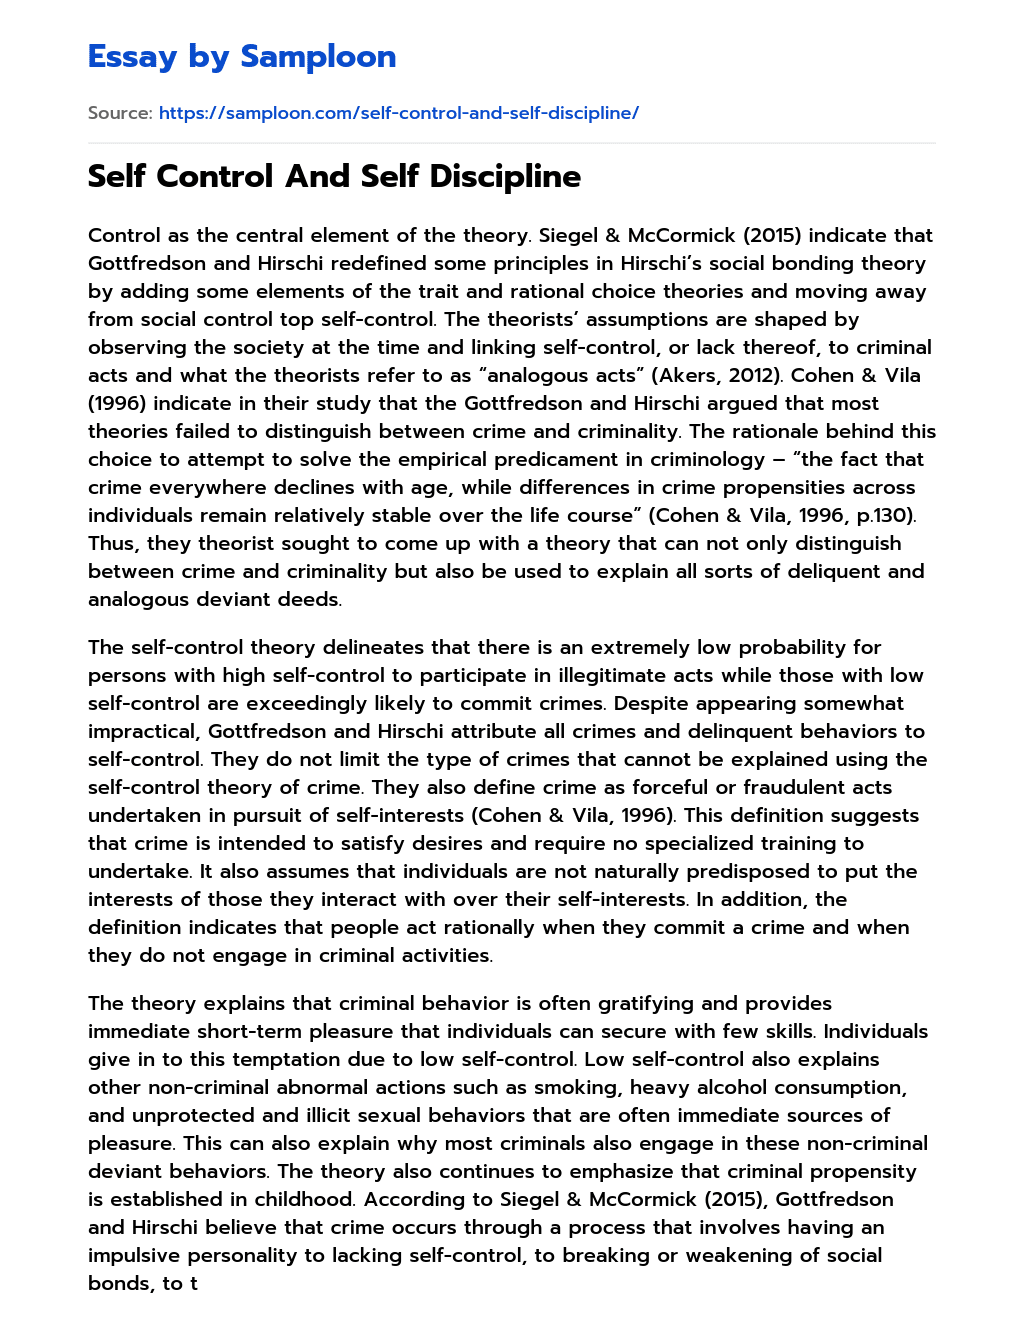 Self Control And Self Discipline essay